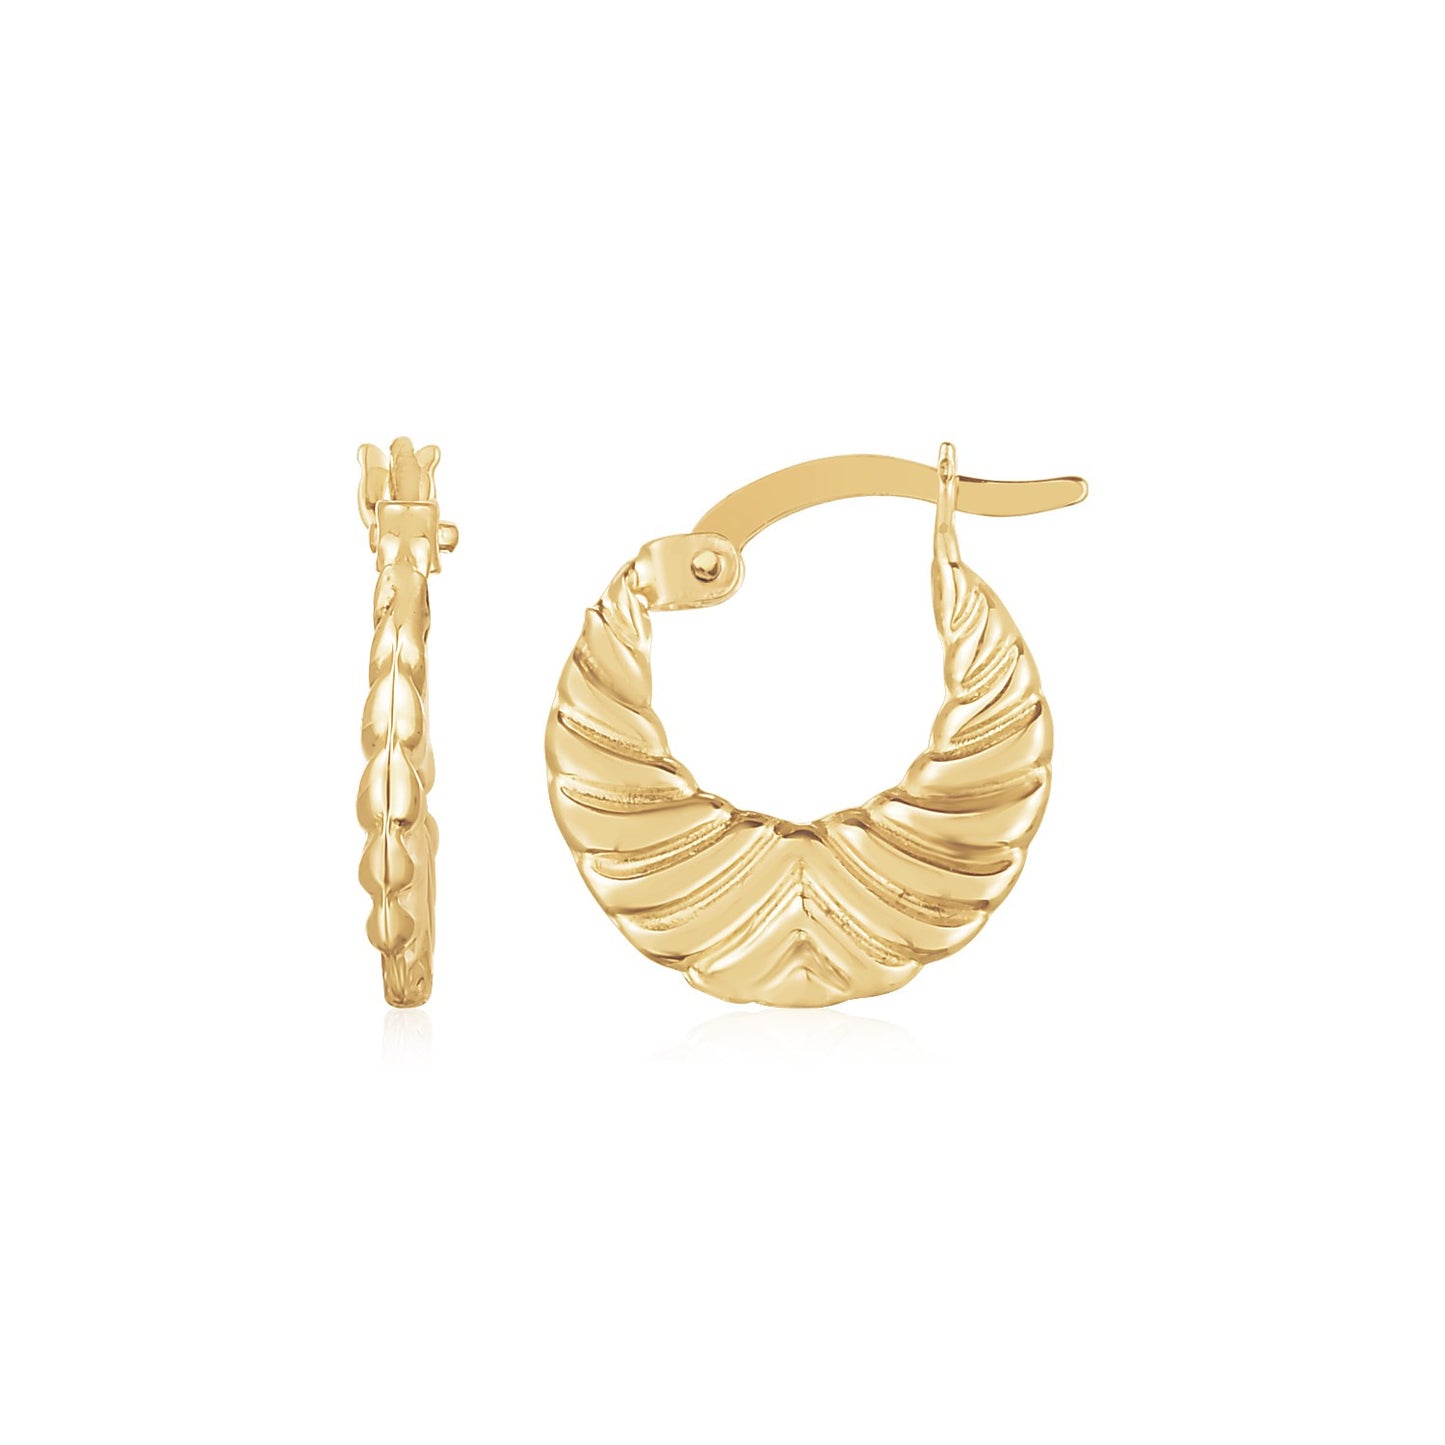 14K Yellow Gold Graduated Grooved Fancy Hoop Earrings